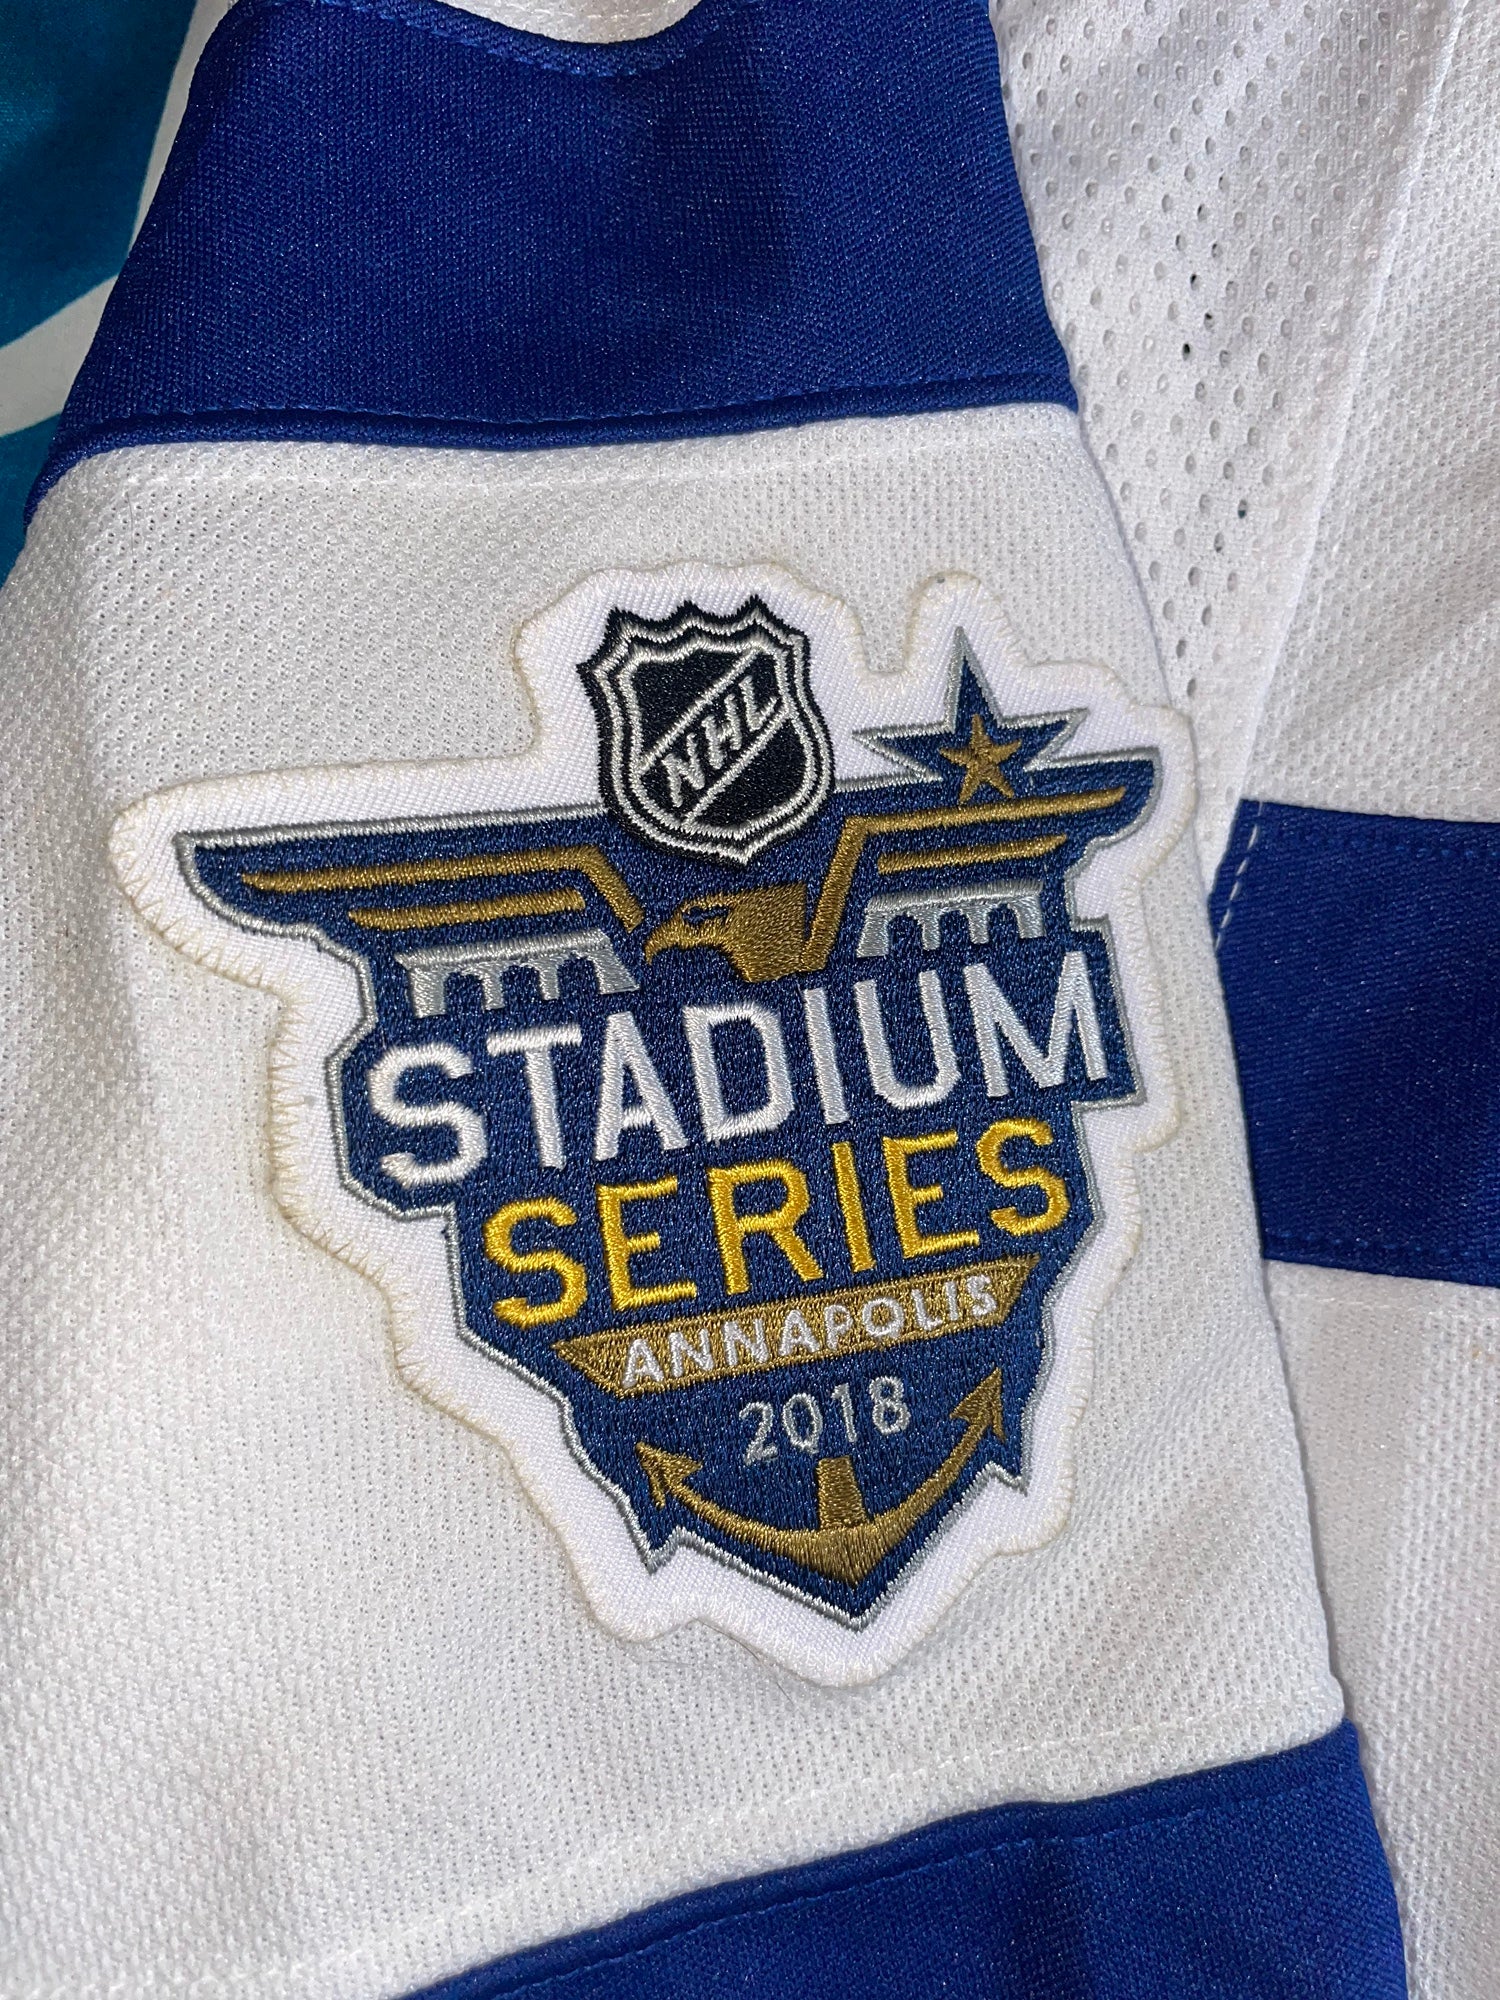 Toronto Maple Leafs Adidas Authentic 2018 NHL Stadium Series Hockey Jersey